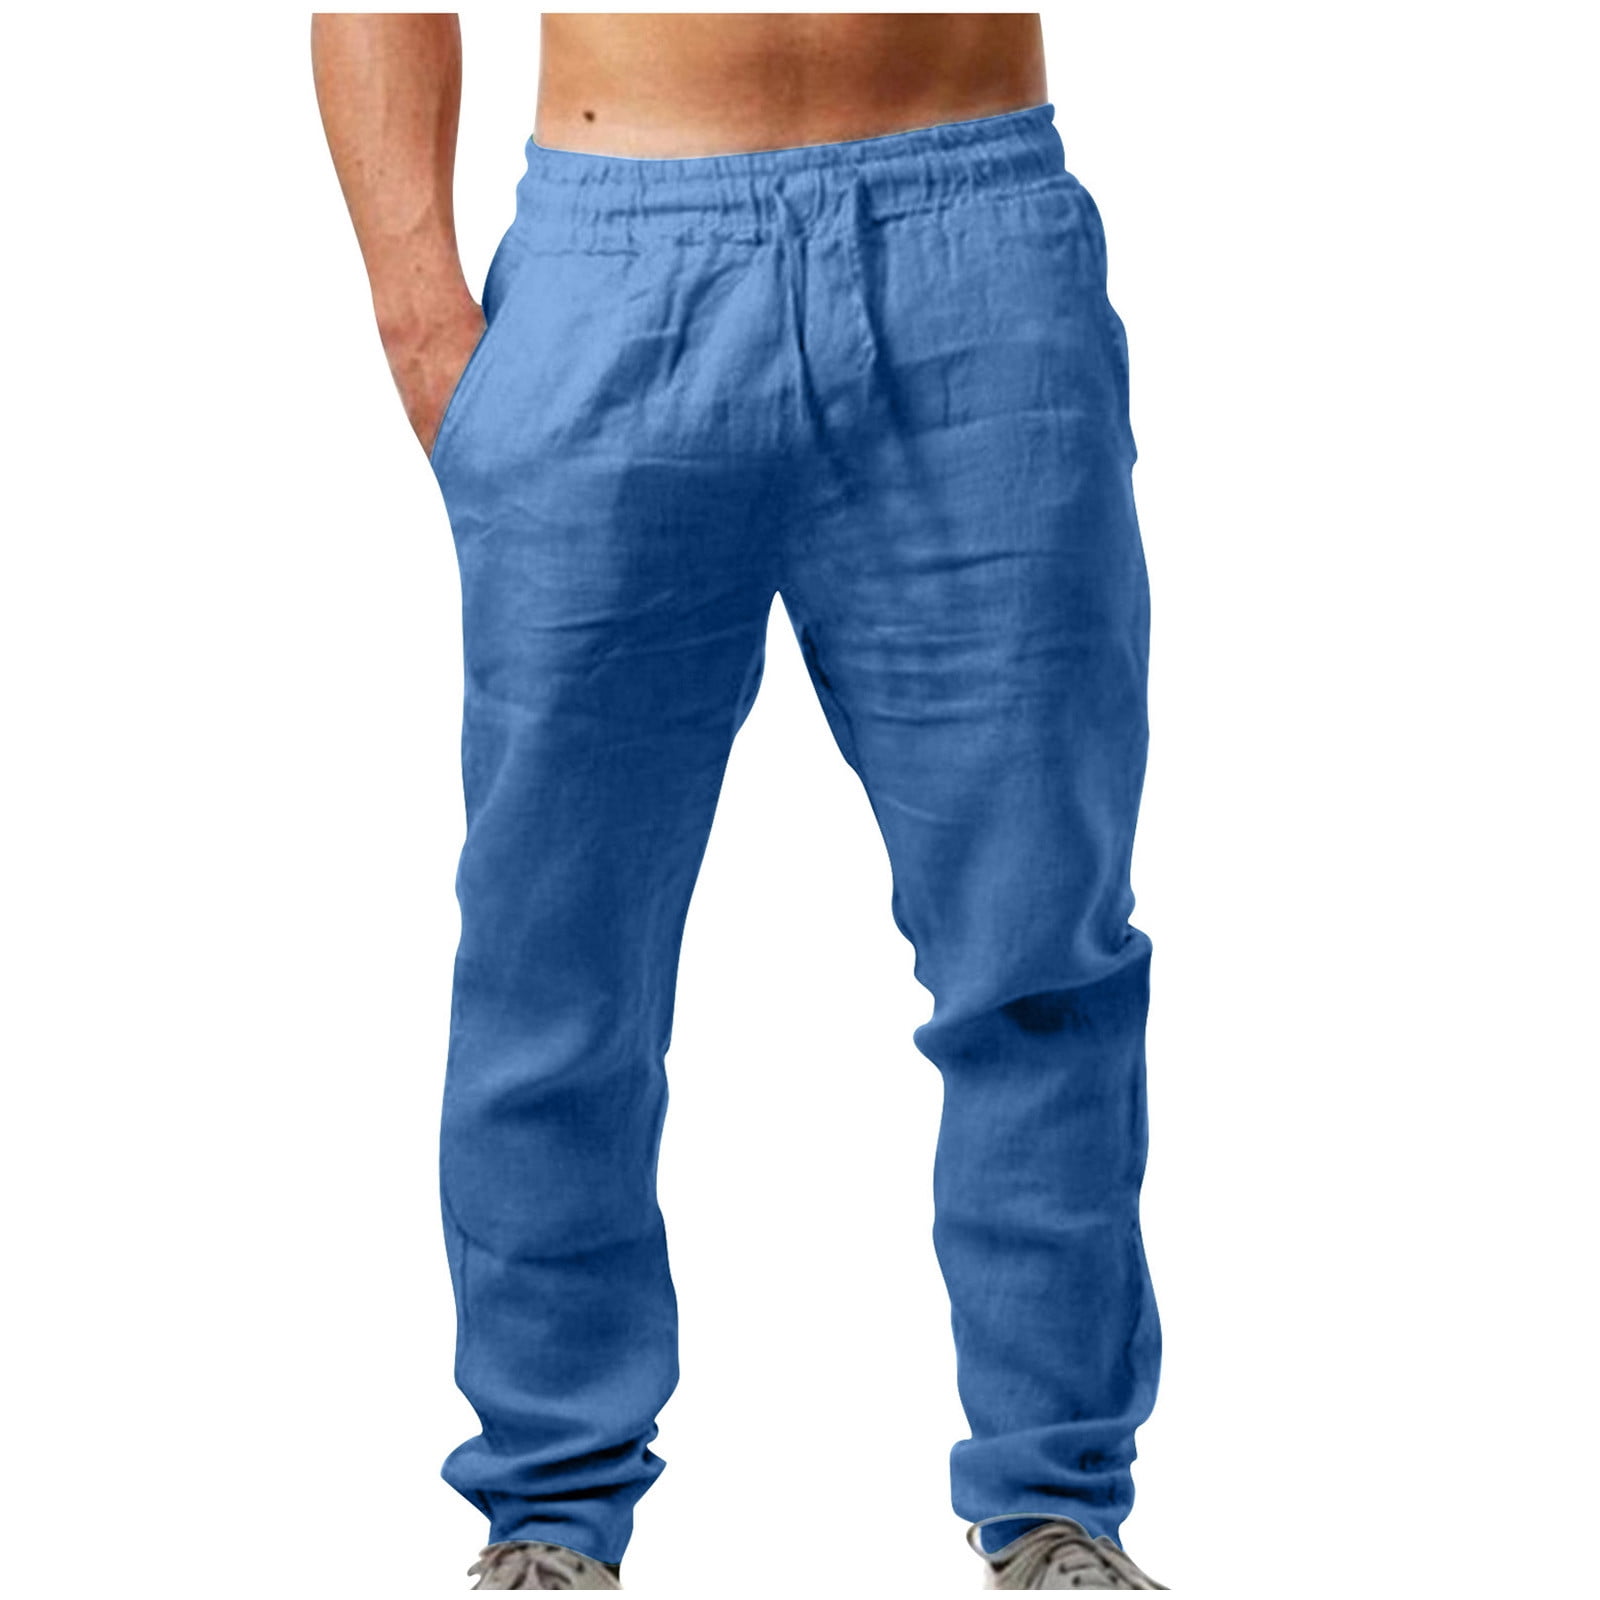 JNGSA Men's Cotton Linen Panel Trousers with Pocket Casual Elastic ...